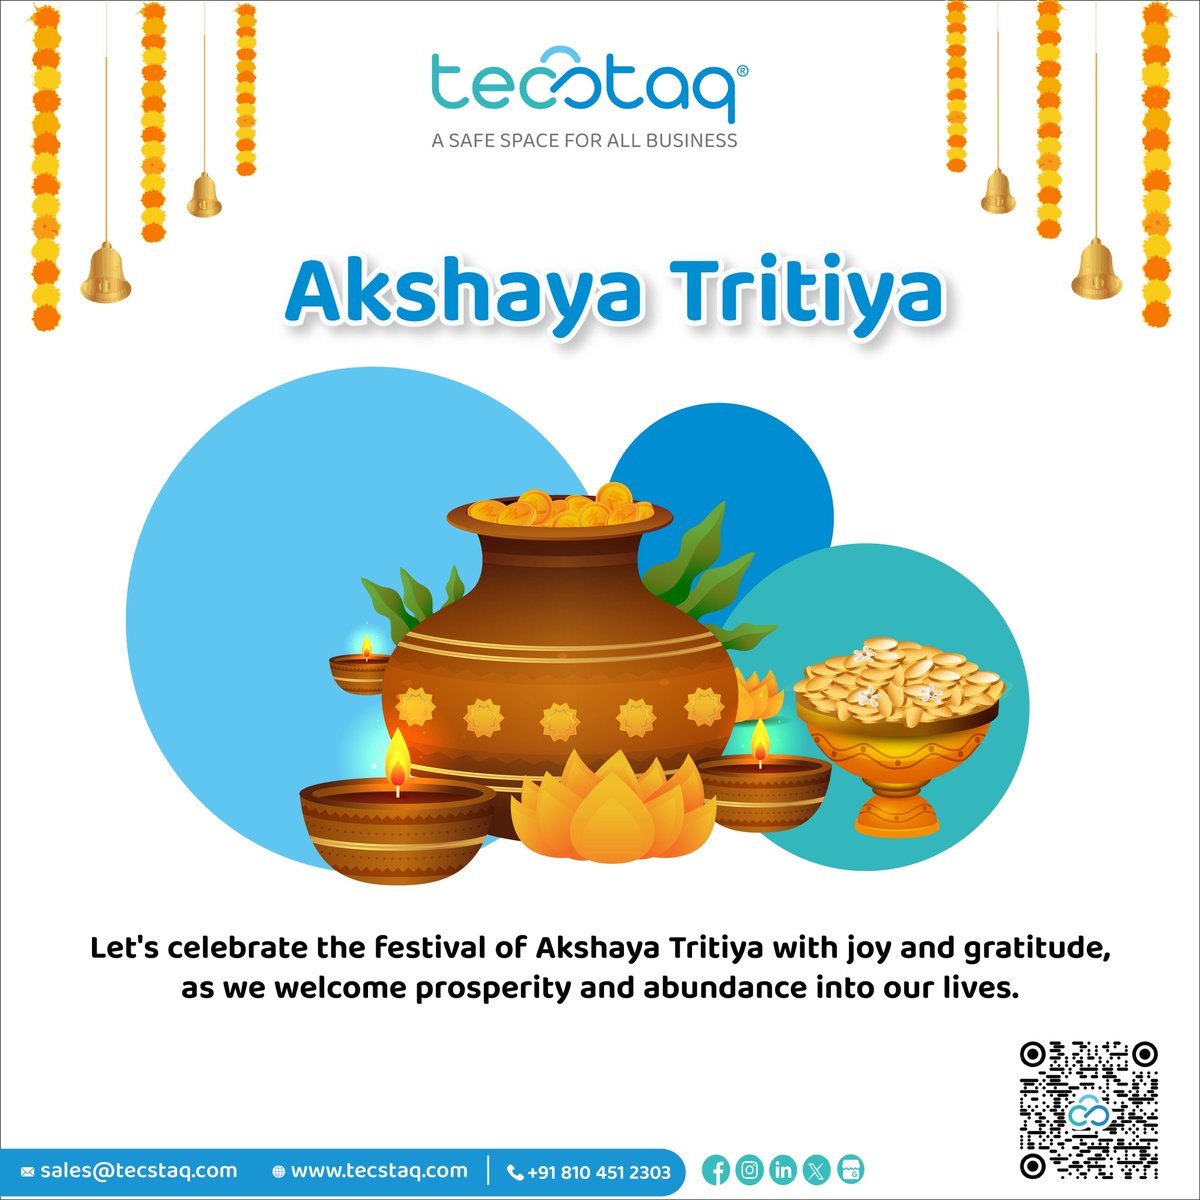 On this auspicious day, let's celebrate the spirit of abundance and everlasting prosperity. 𝐇𝐚𝐩𝐩𝐲 𝐀𝐤𝐬𝐡𝐚𝐲 𝐓𝐫𝐢𝐭𝐢𝐲𝐚! #TecStaq #GreenAims #AkshayTritiya #NewBeginnings #FestivalOfAbundance #Tradition #Celebration #FestivalVibes